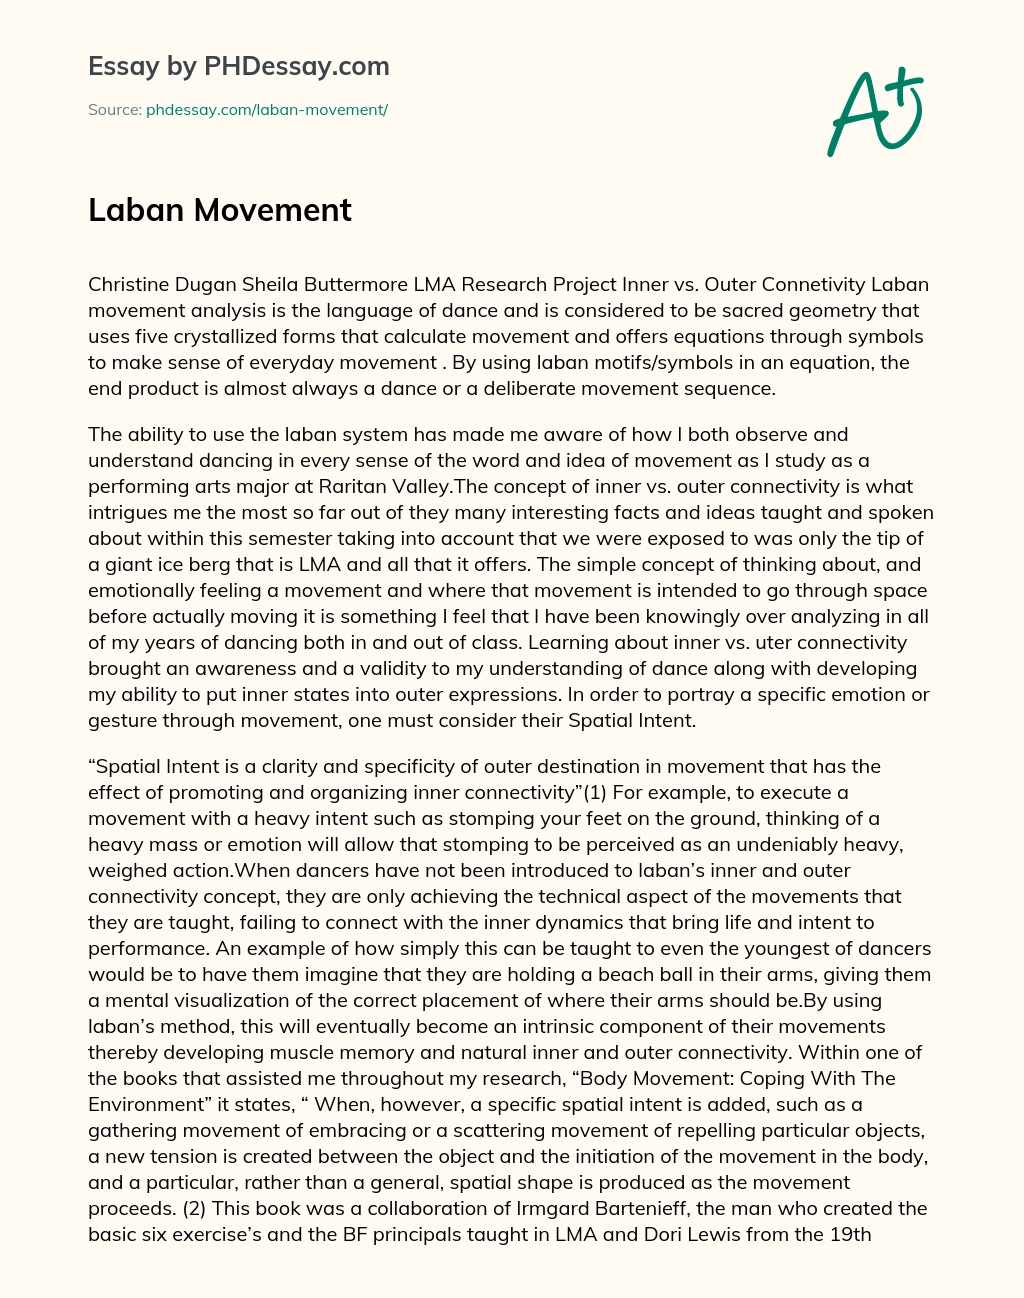 Laban Movement essay